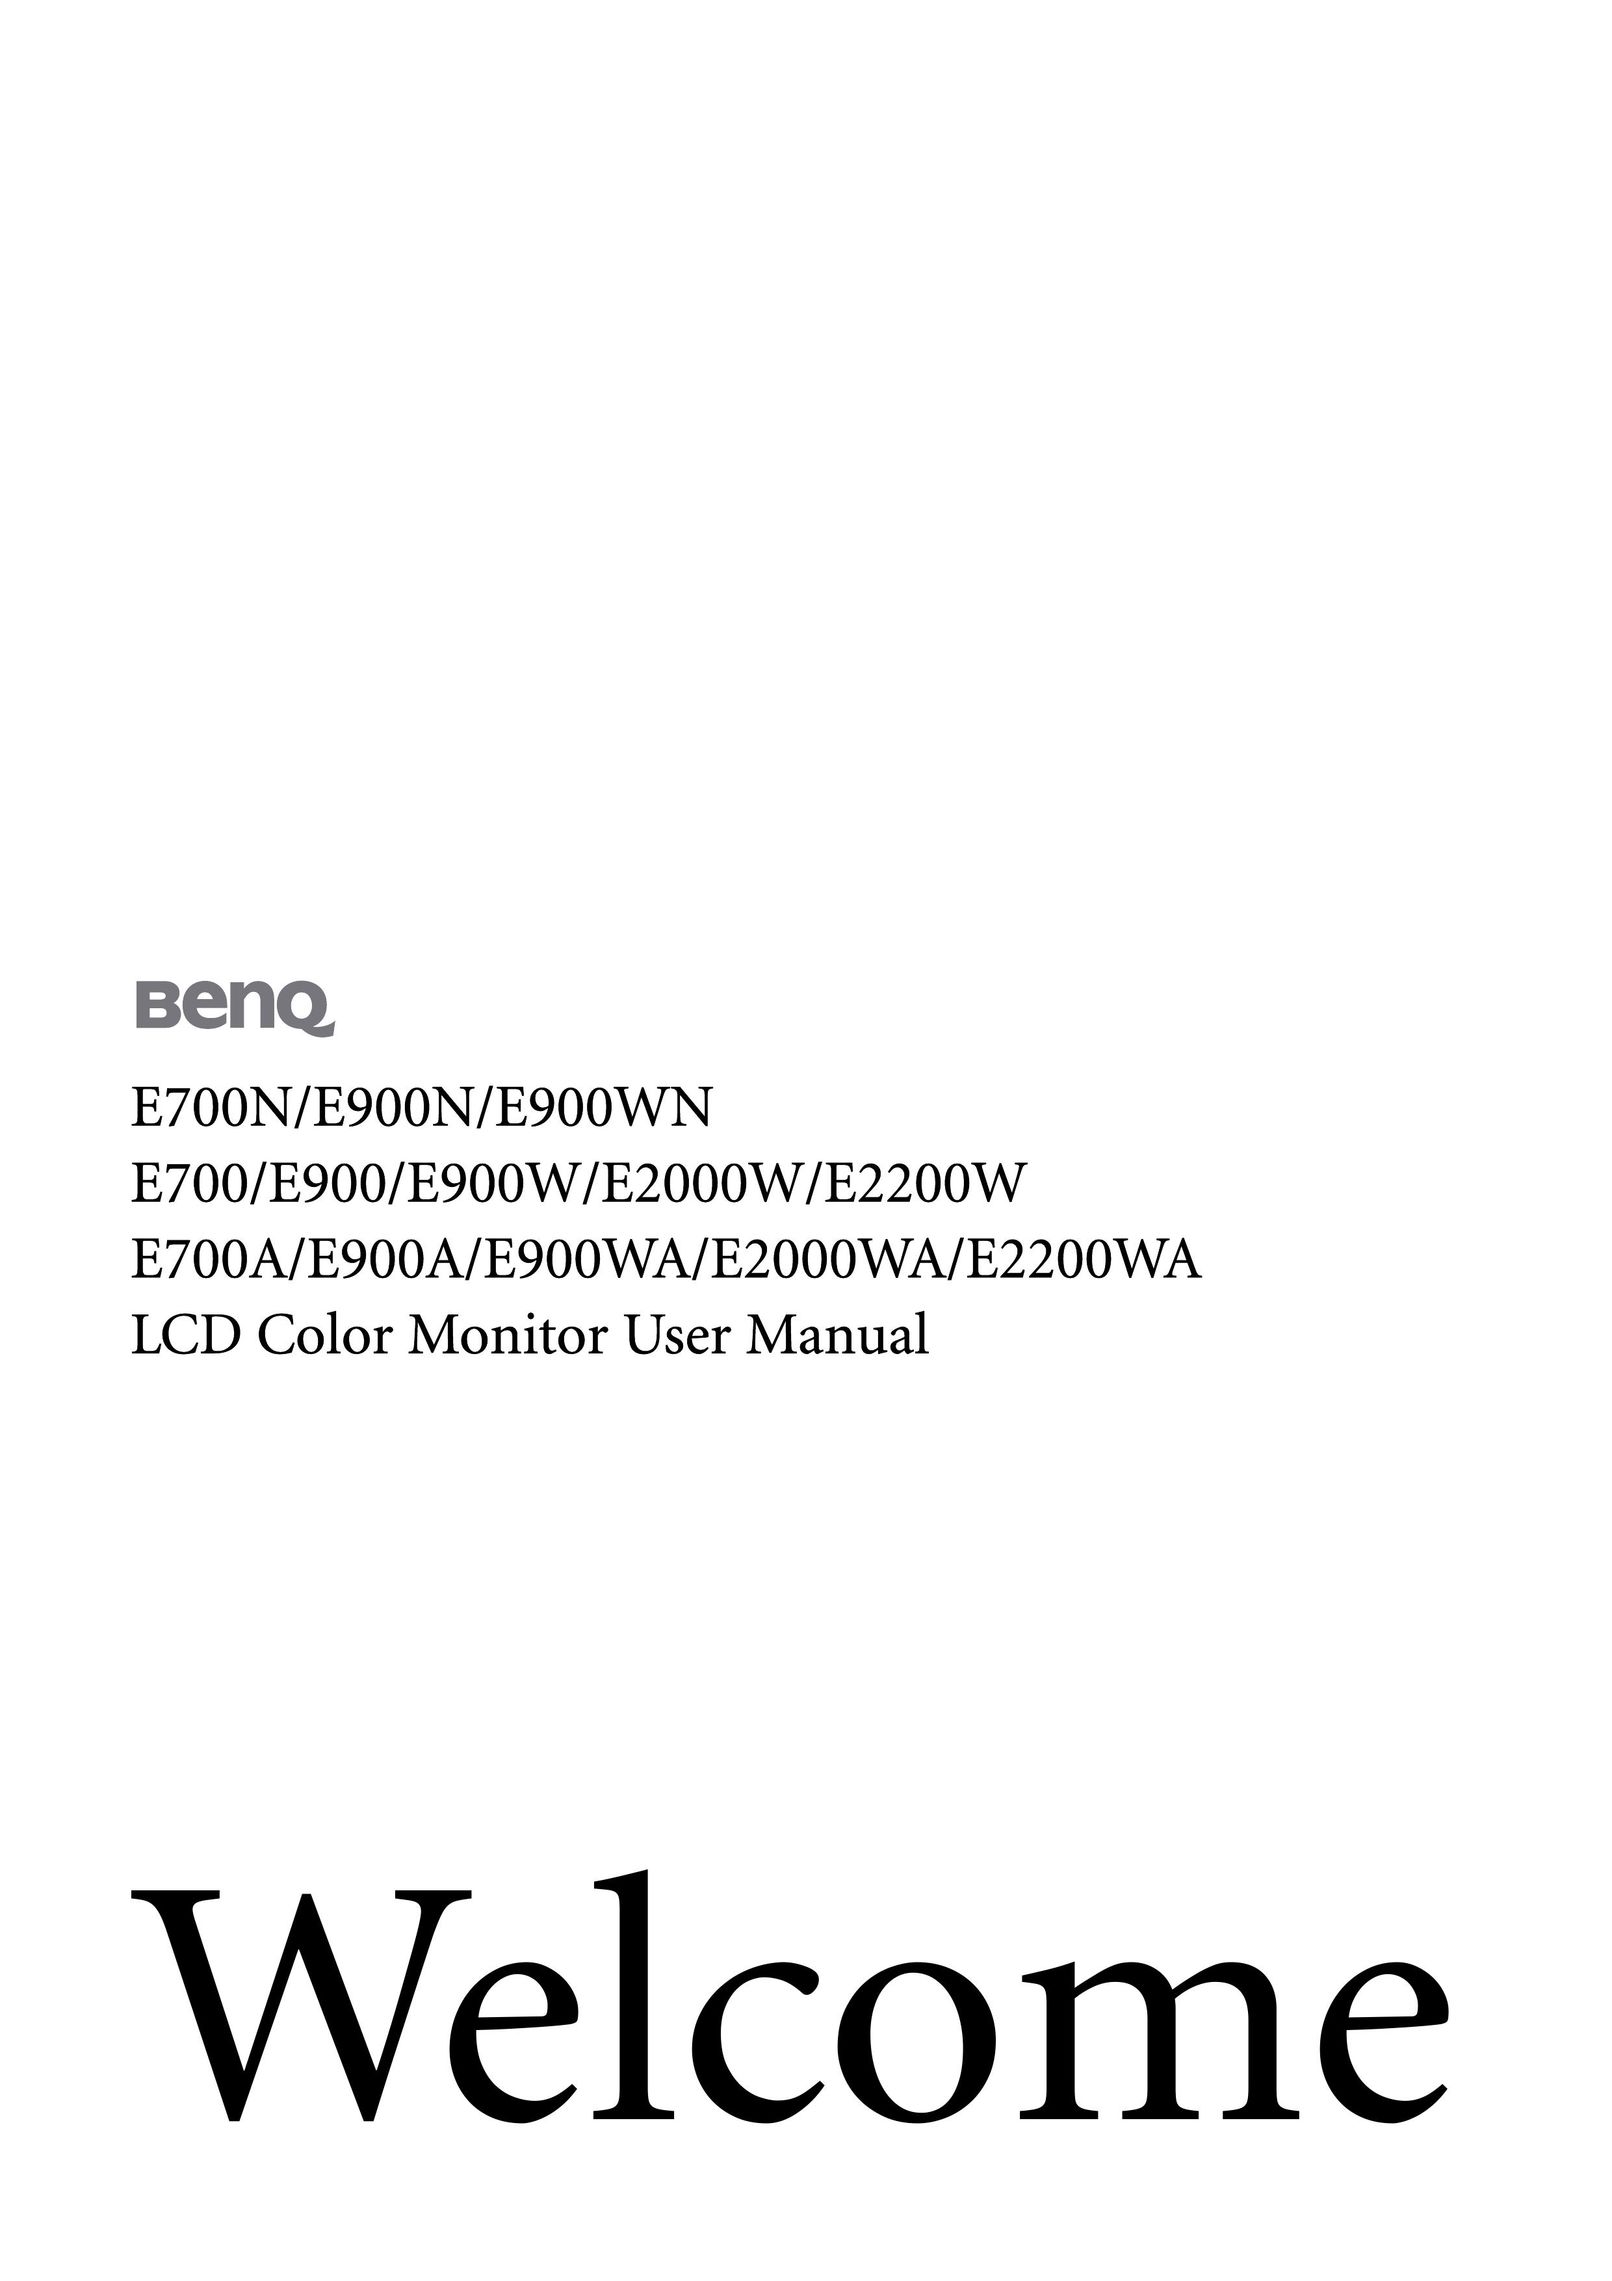 BenQ E700N Computer Monitor User Manual